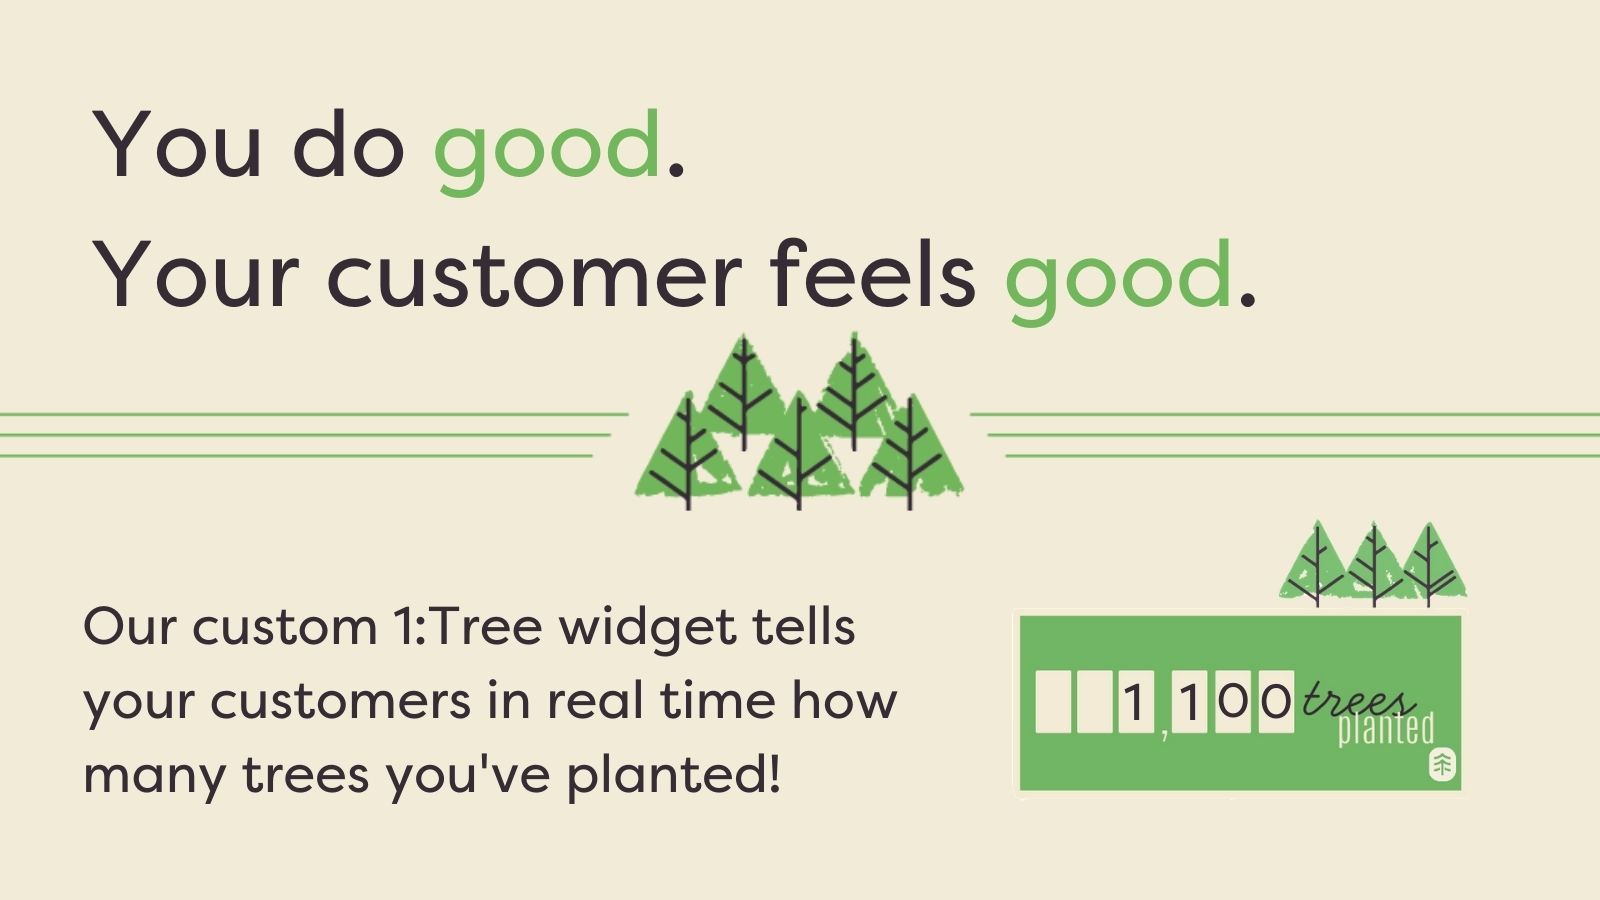 You do good. Your customer feels good.